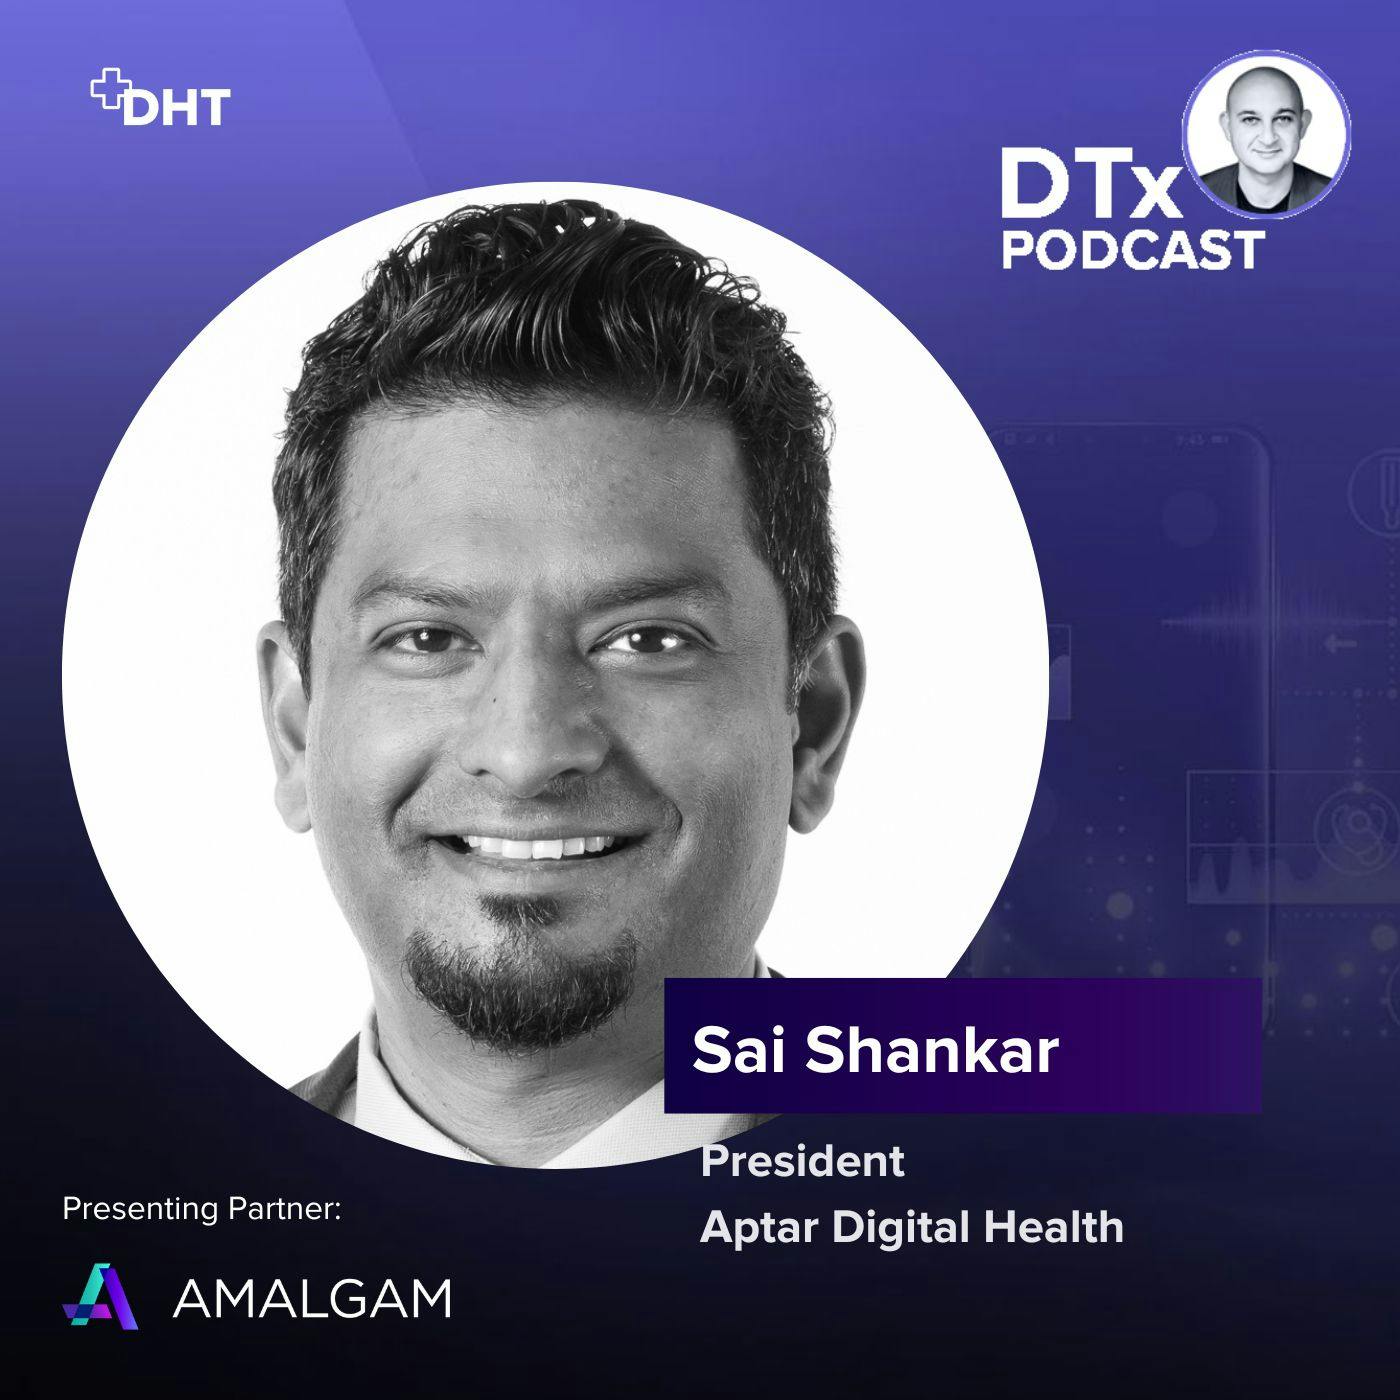 Drug-delivery Solutions: Sai Shankar gives insights on the Digital Health Unit at Aptar Pharma